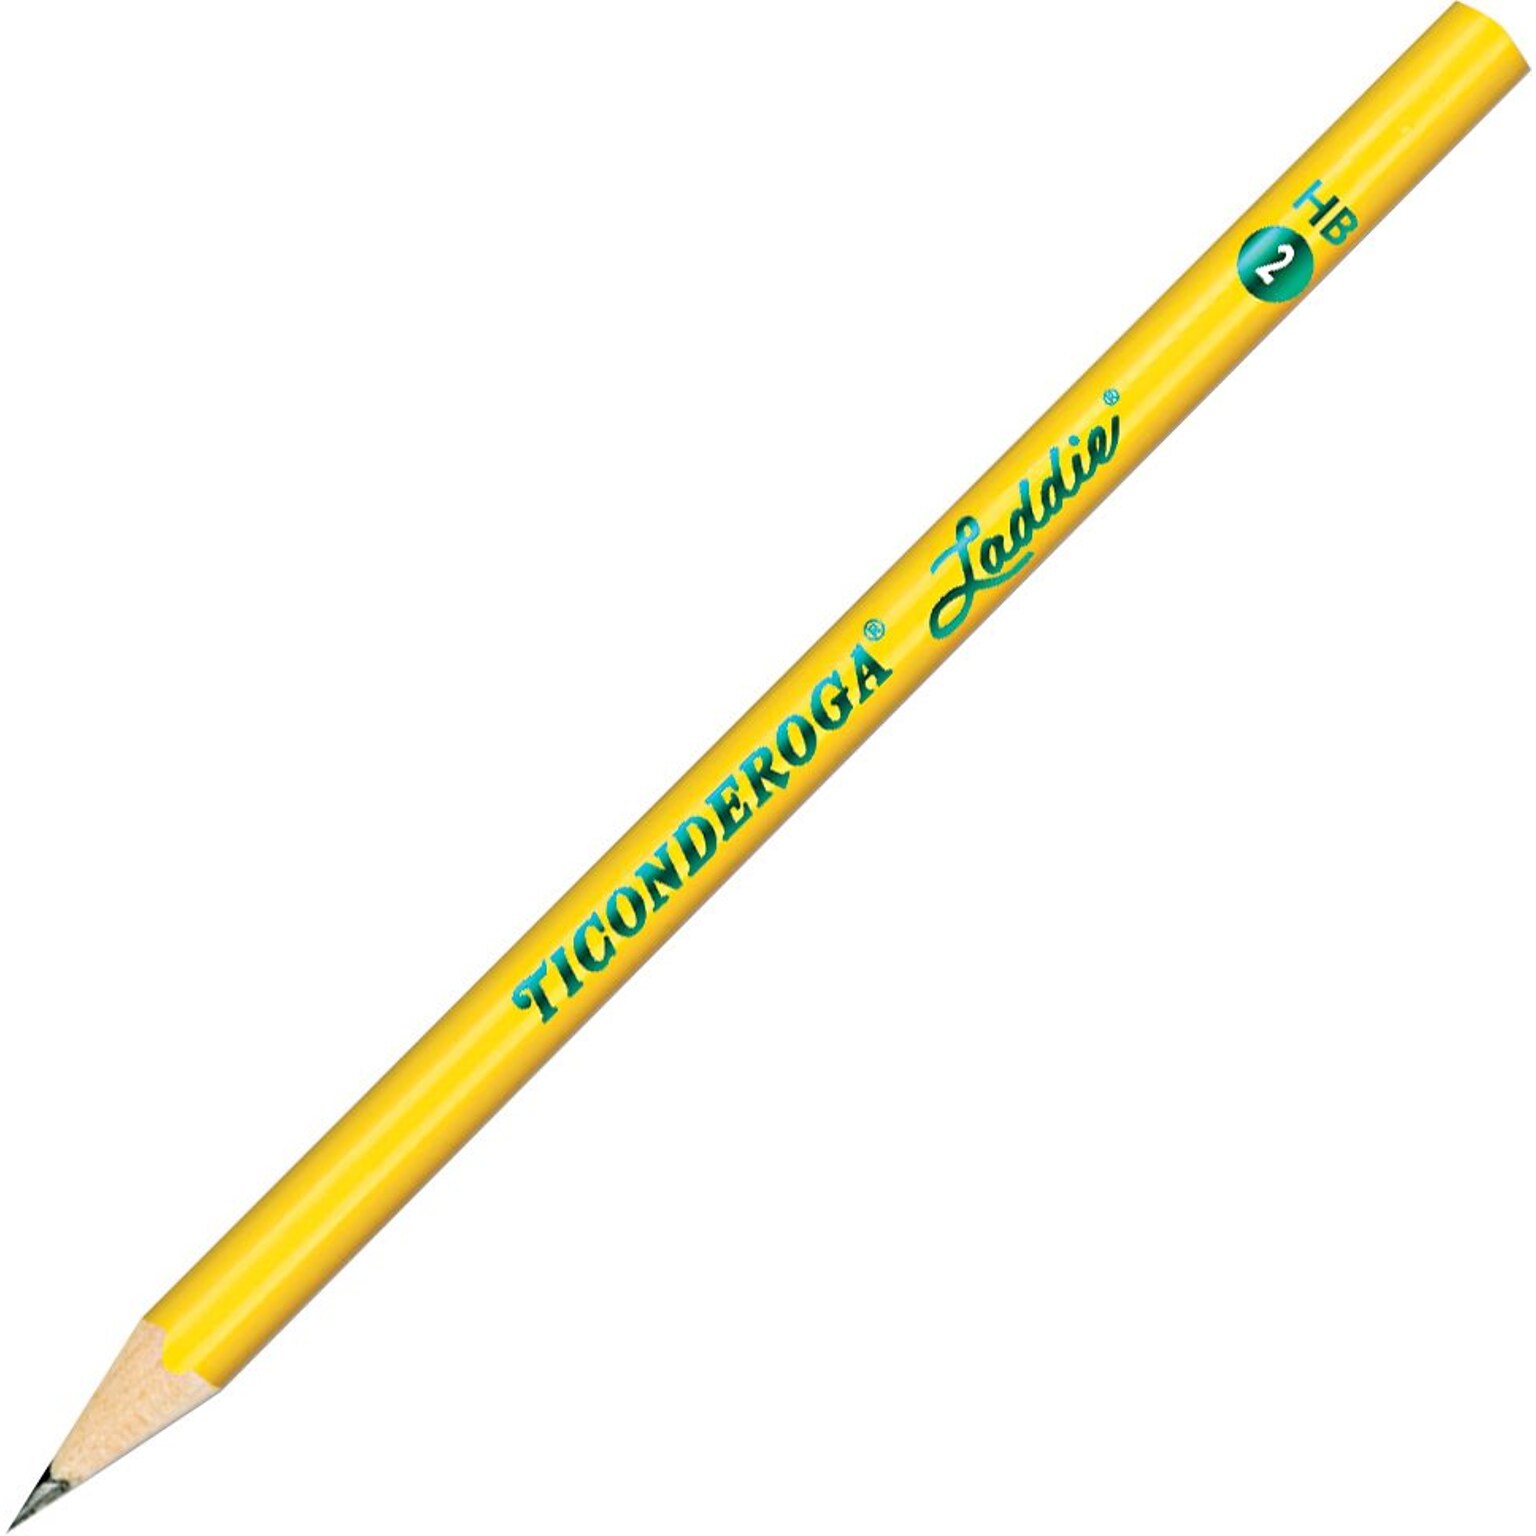 Dixon Ticonderoga Laddie Woodcase Pencil without Eraser, Yellow, No. 2 Soft Lead, Dozen (13040)